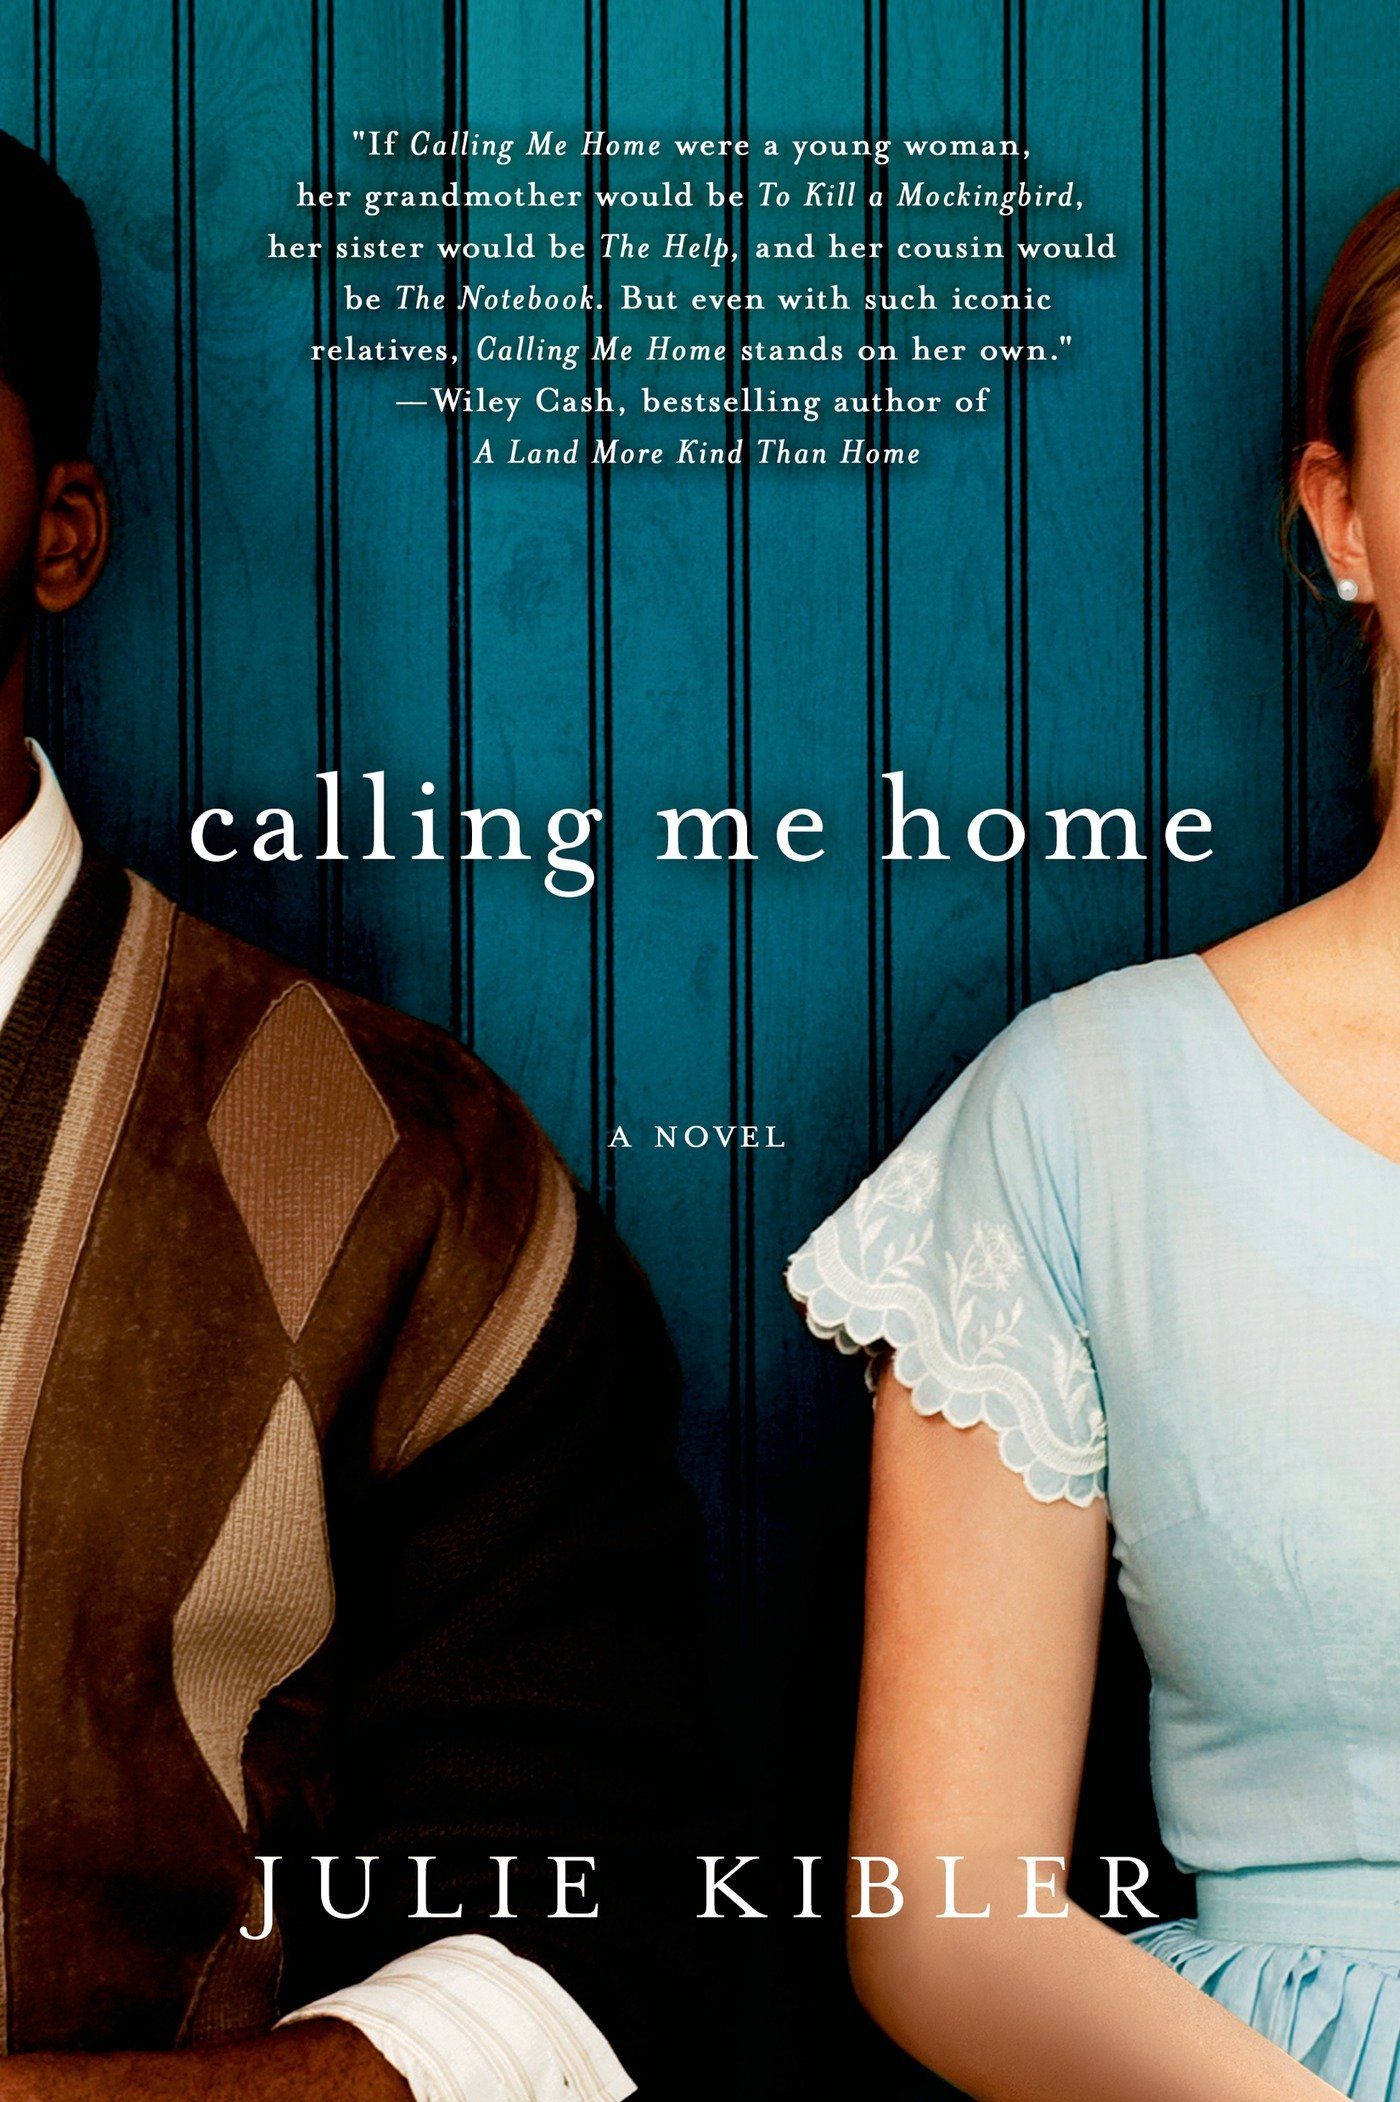 Calling Me Home by Julie Kibler